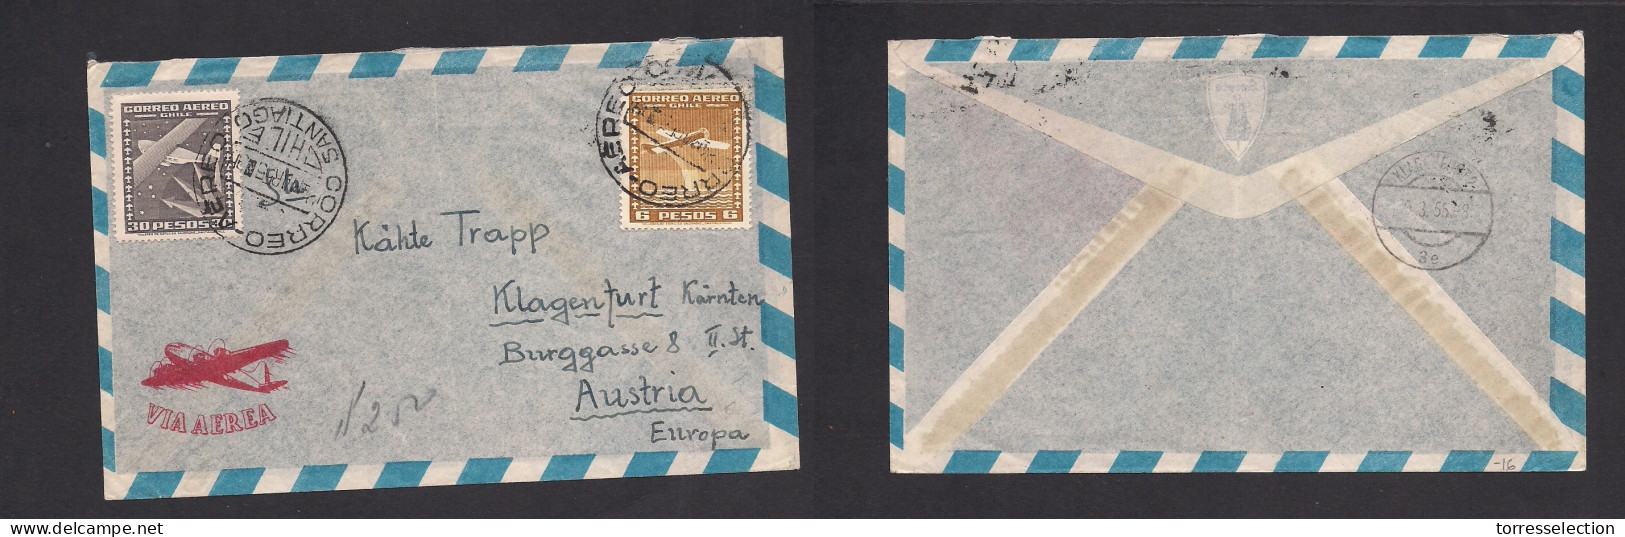 Chile - XX. 1955 (24 March) Stgo - Austria, Klagenfurt (29 March) Air Multifkd Env 36 Pesos Rate. XSALE. - Chile